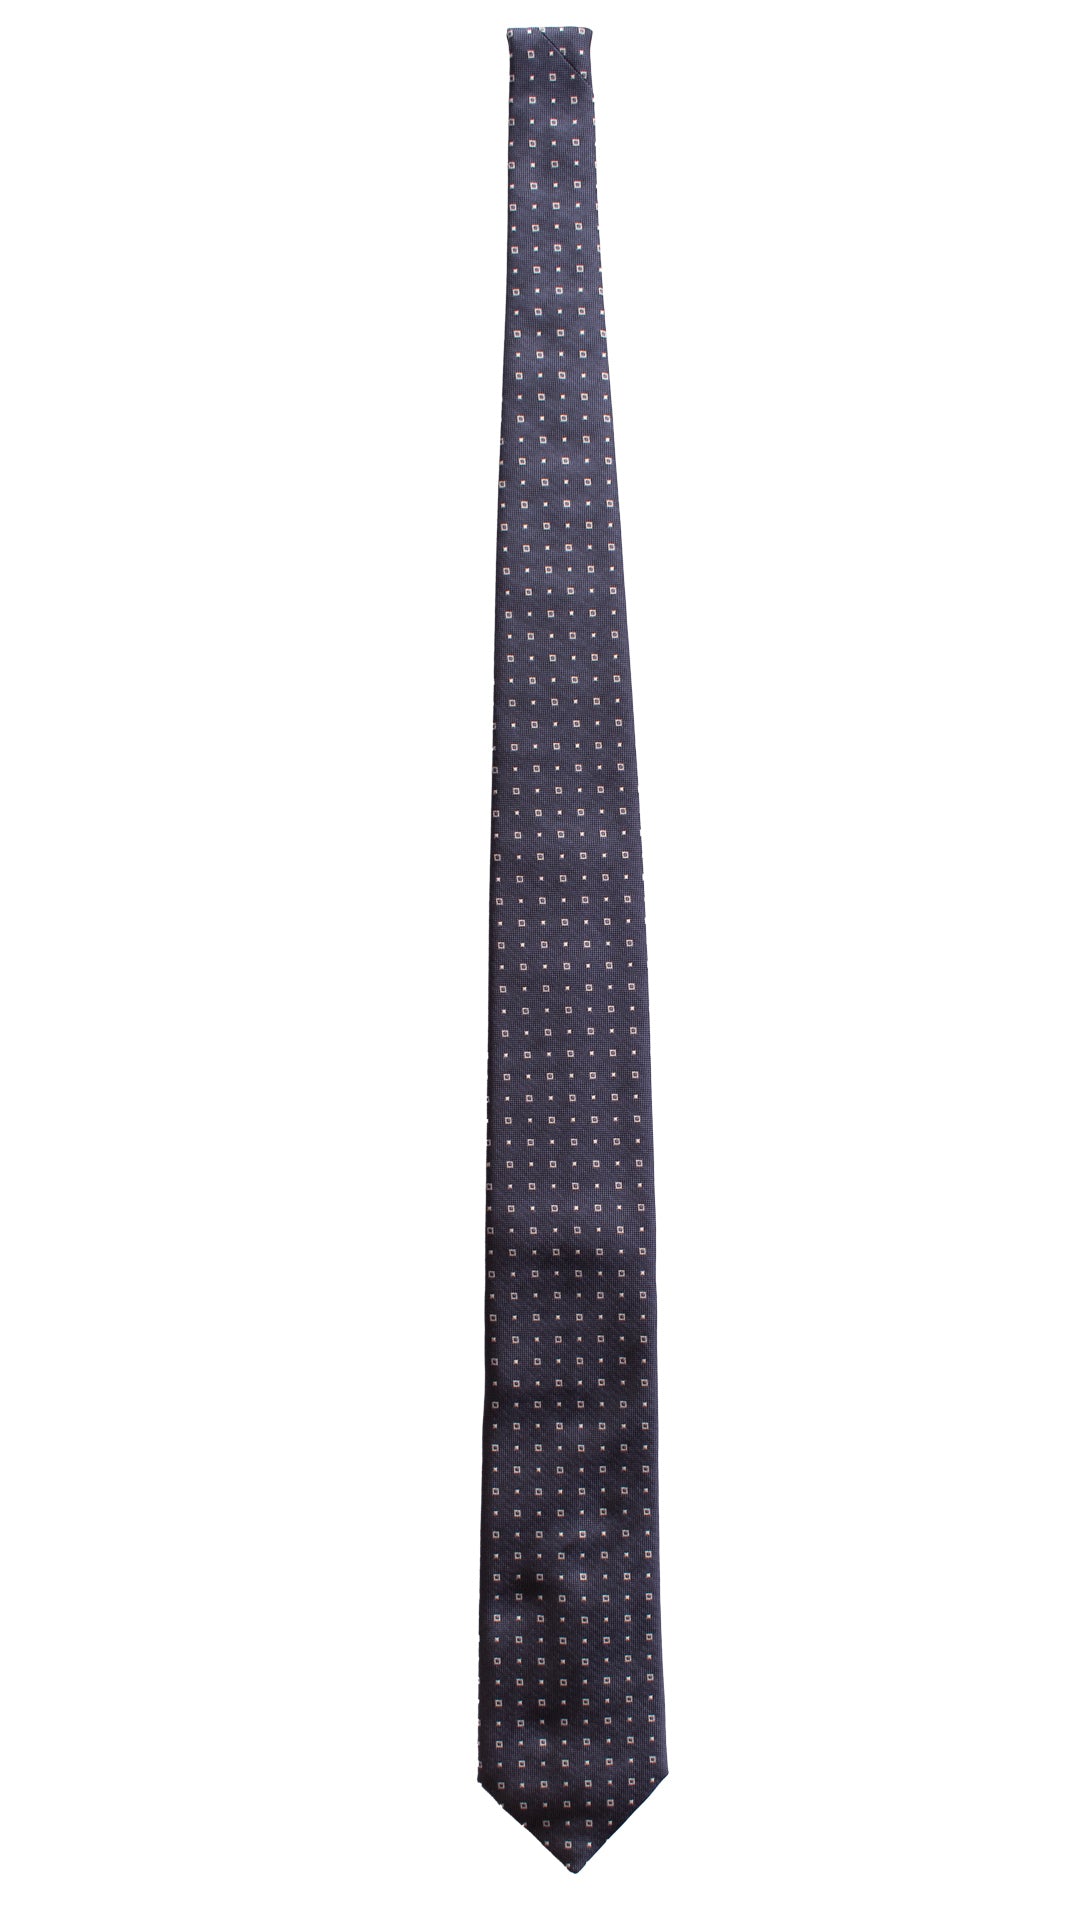 Cravatta da Cerimonia di Seta Blu Navy Fantasia Bianca CY6644 Intera